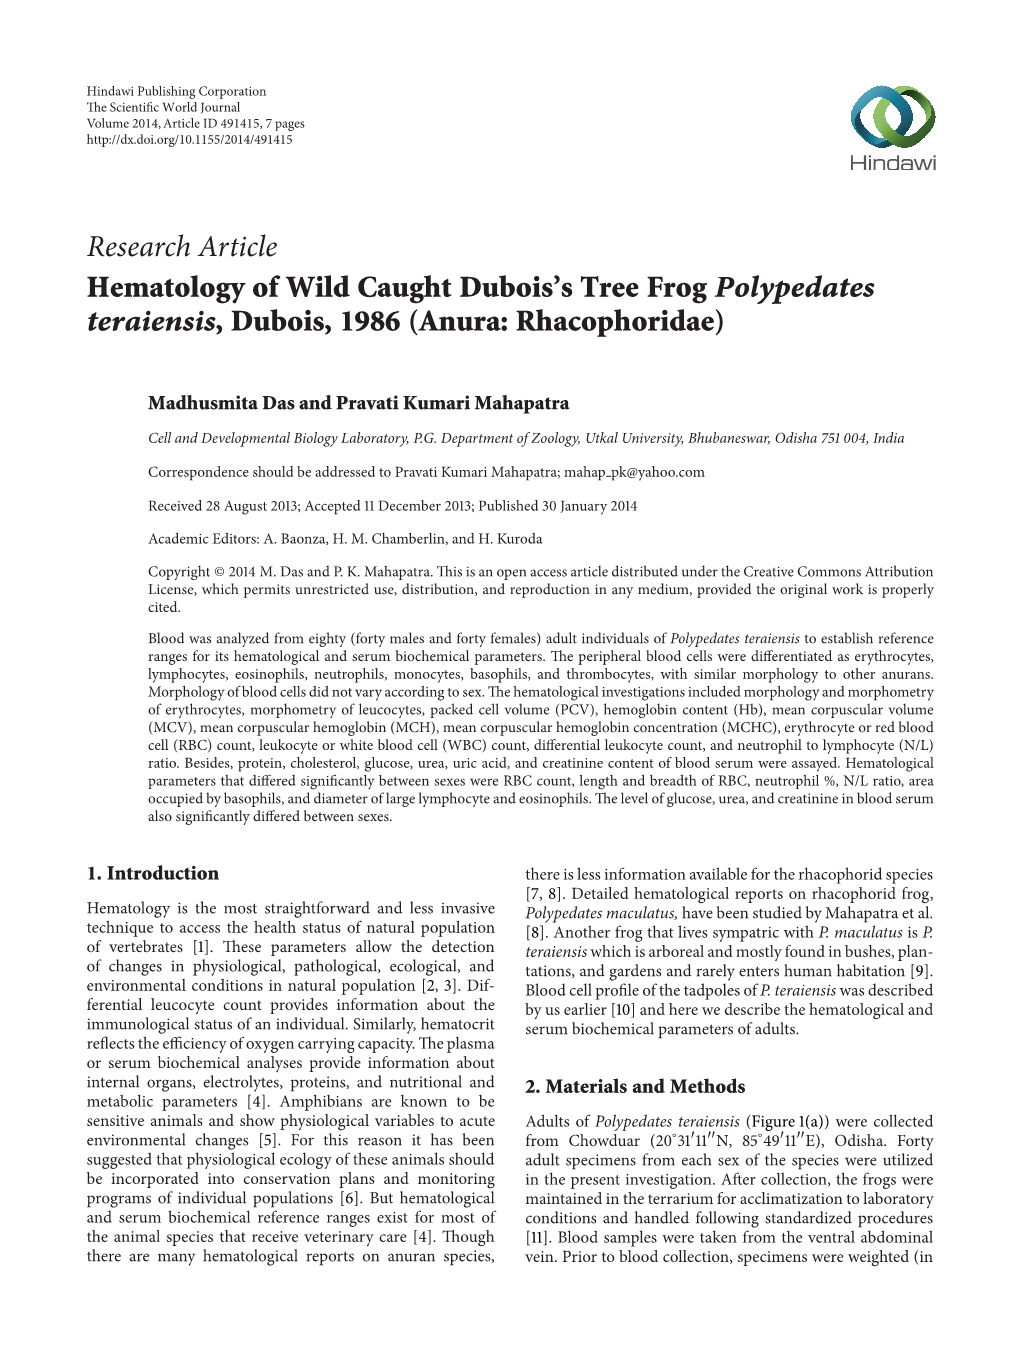 Hematology of Wild Caught Dubois's Tree Frog Polypedates Teraiensis, Dubois, 1986 (Anura: Rhacophoridae)